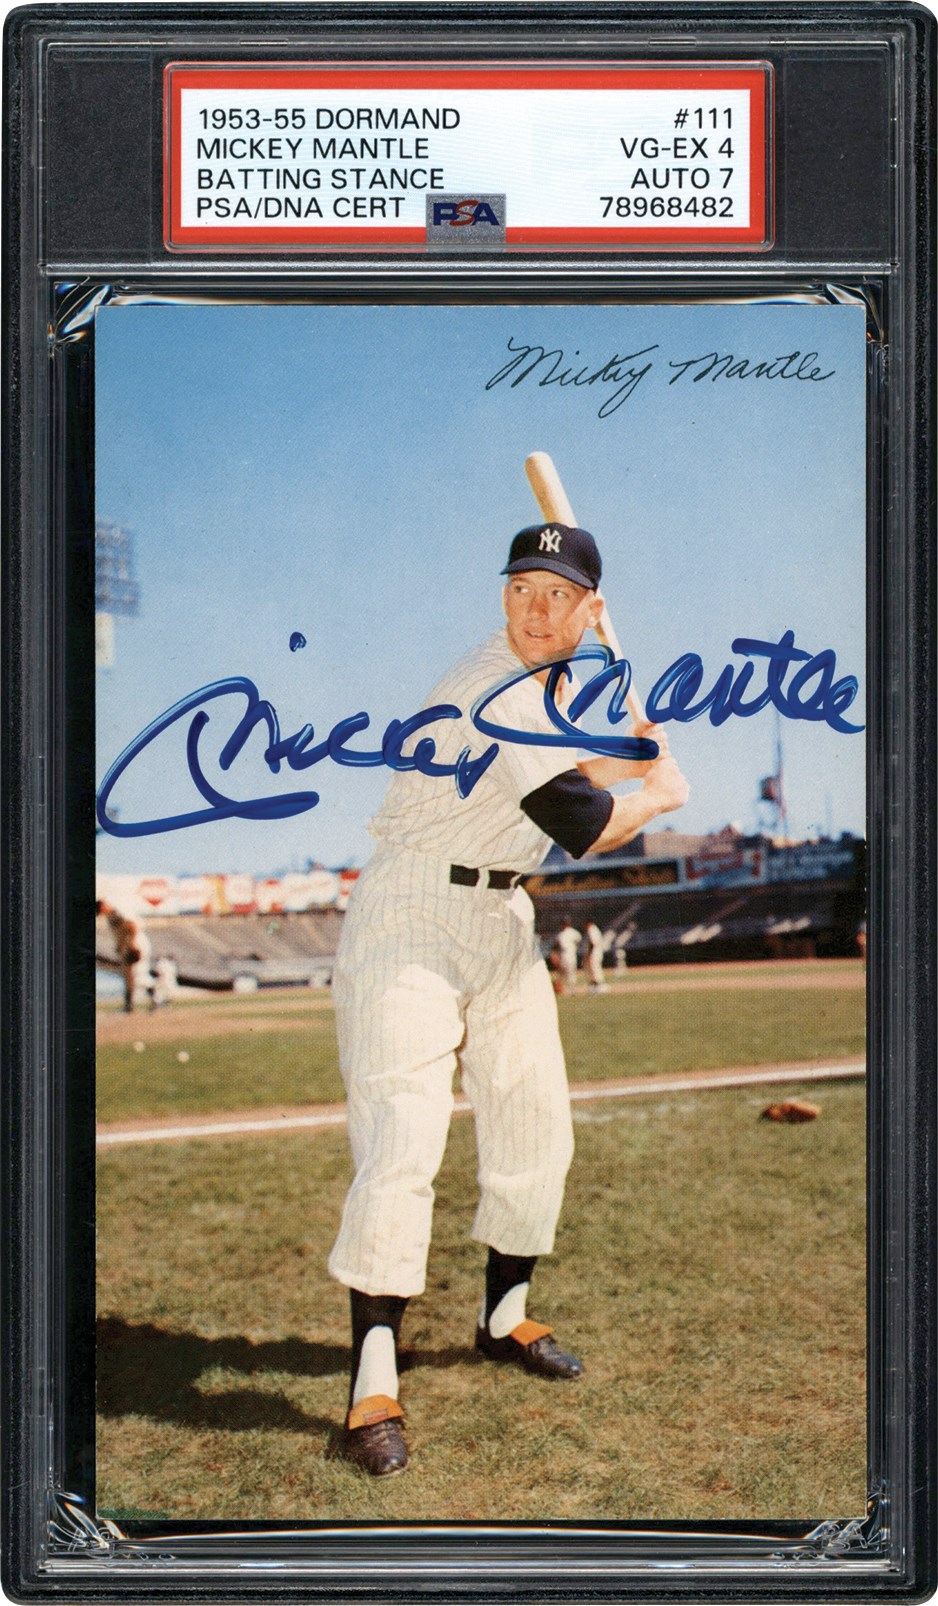 - 1953-1955 Dormand Mickey Mantle Batting Stance Signed Postcard PSA VG-EX 4 Auto 7 (Pop 1 One Higher!)